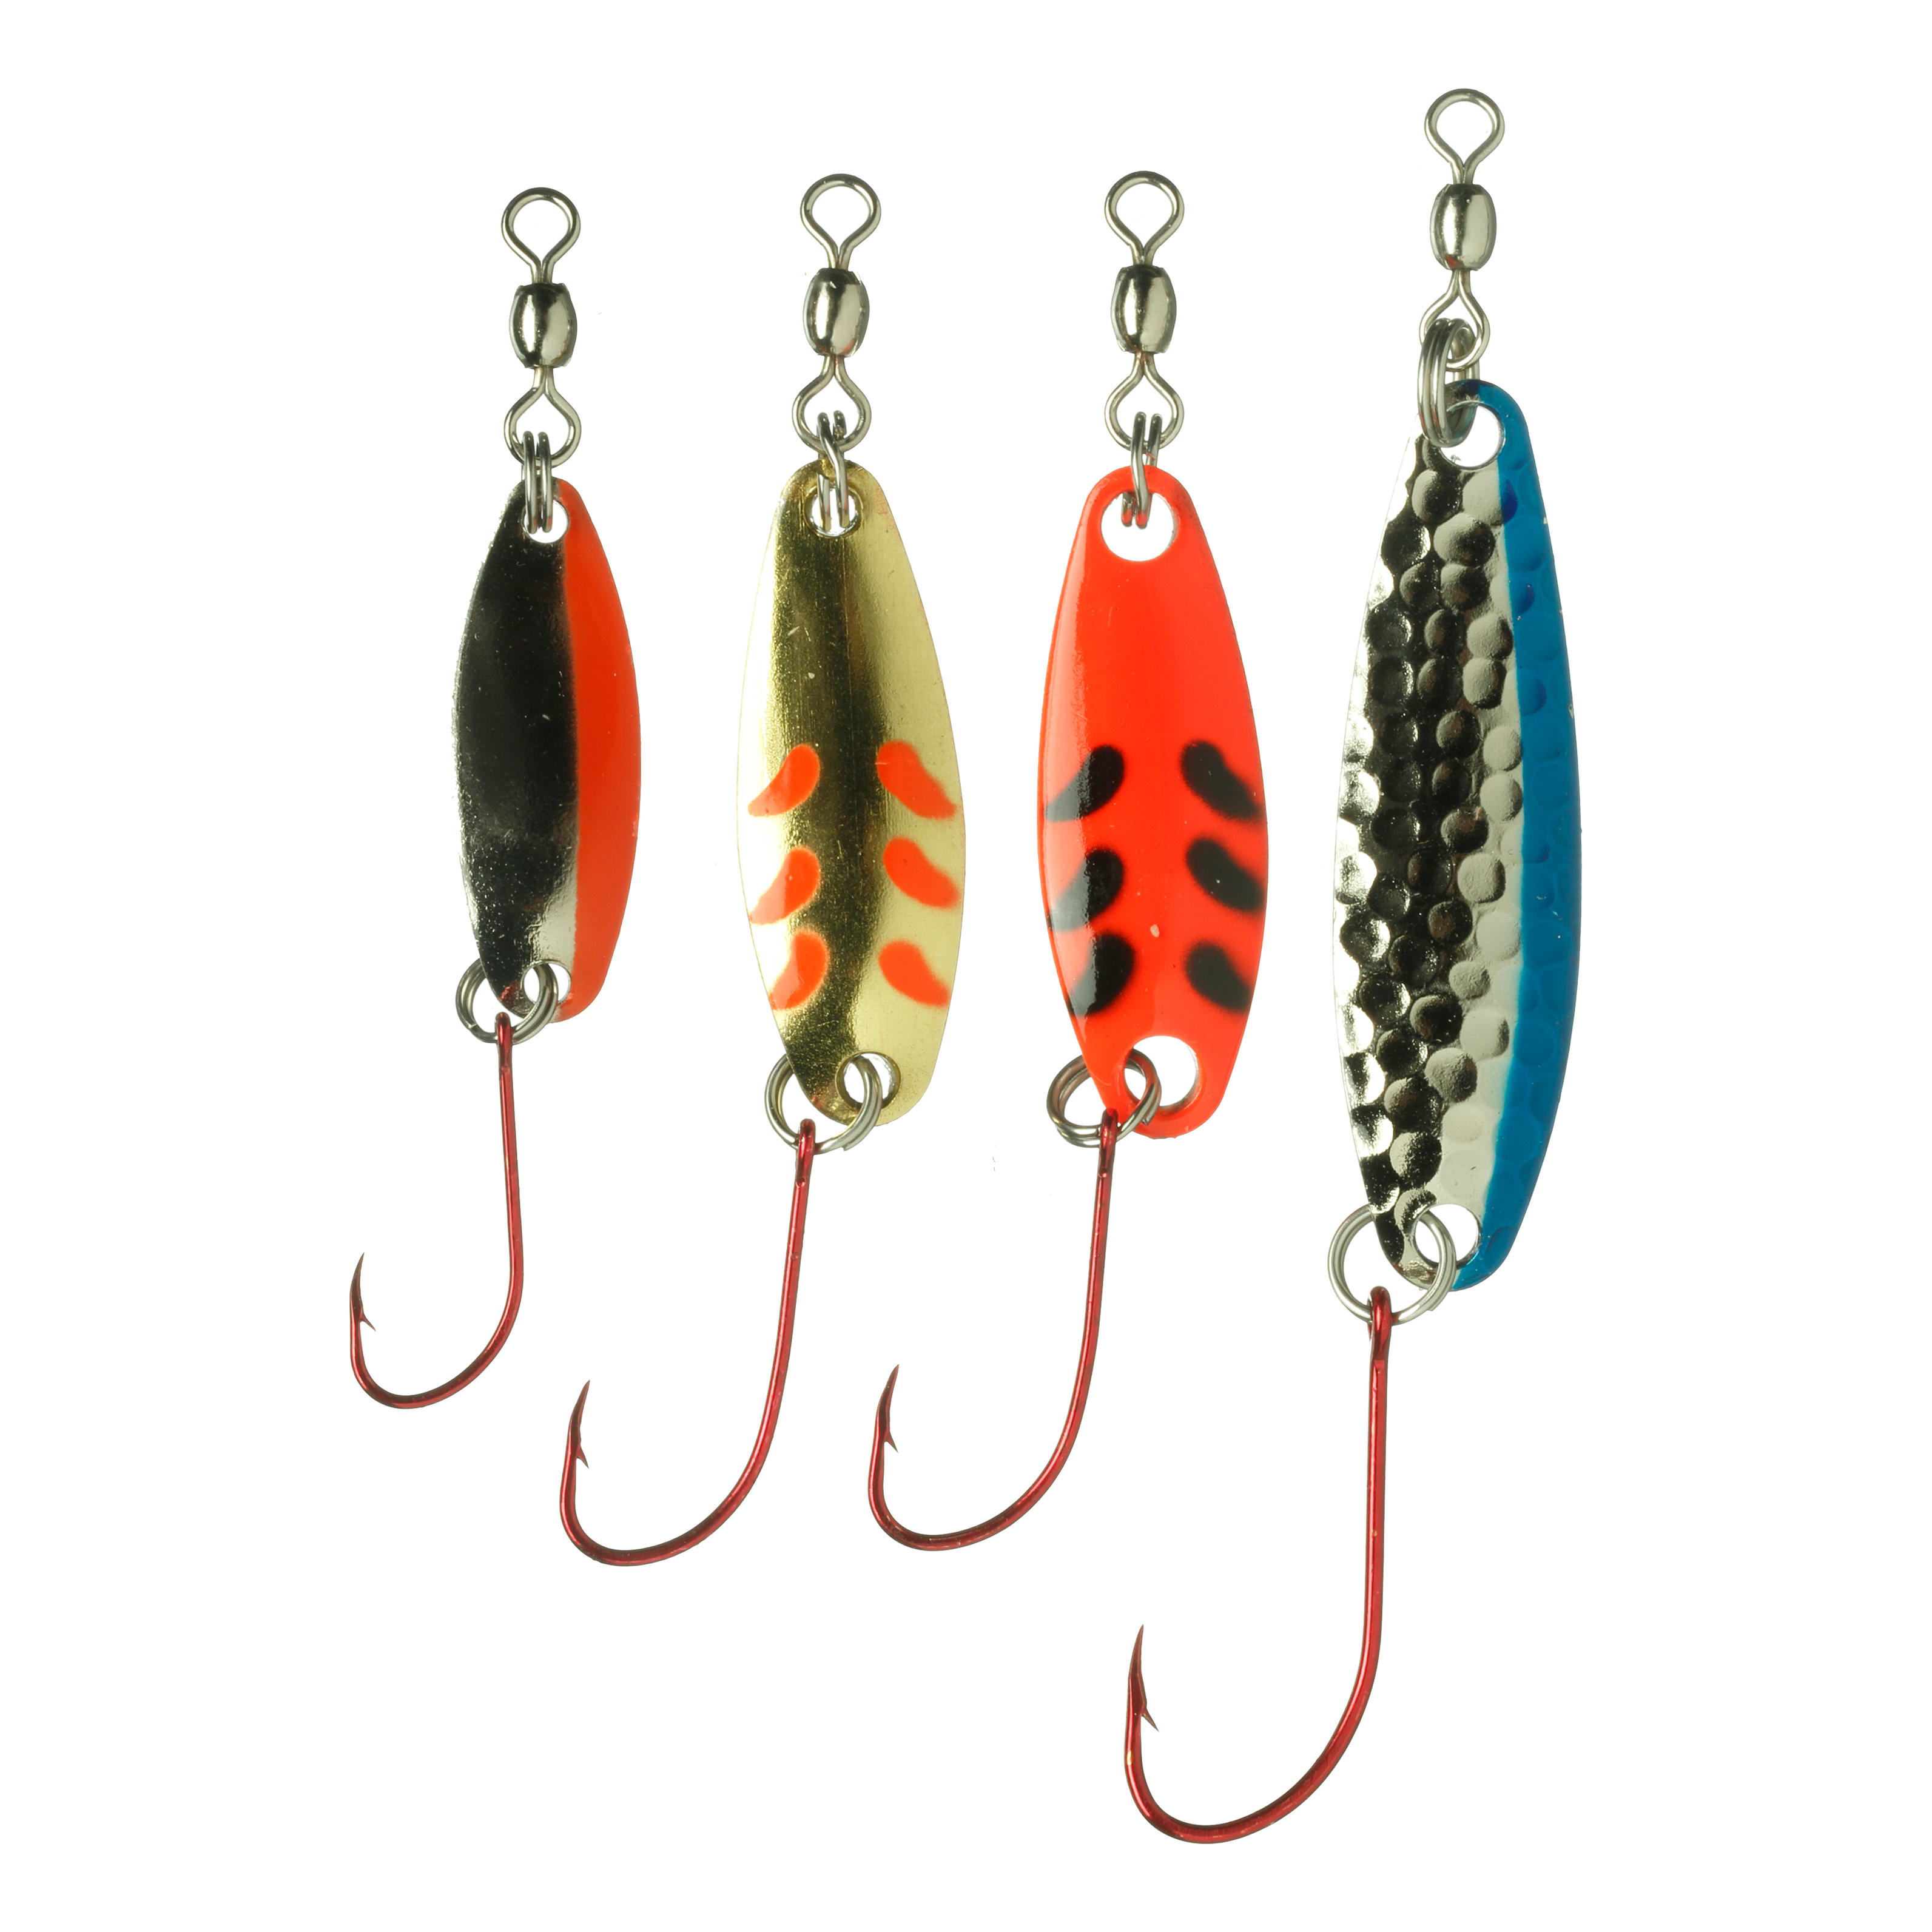 Buy Fishing Lure Set Kit,LifeVC® Soft And Hard Lure Baits Tackle